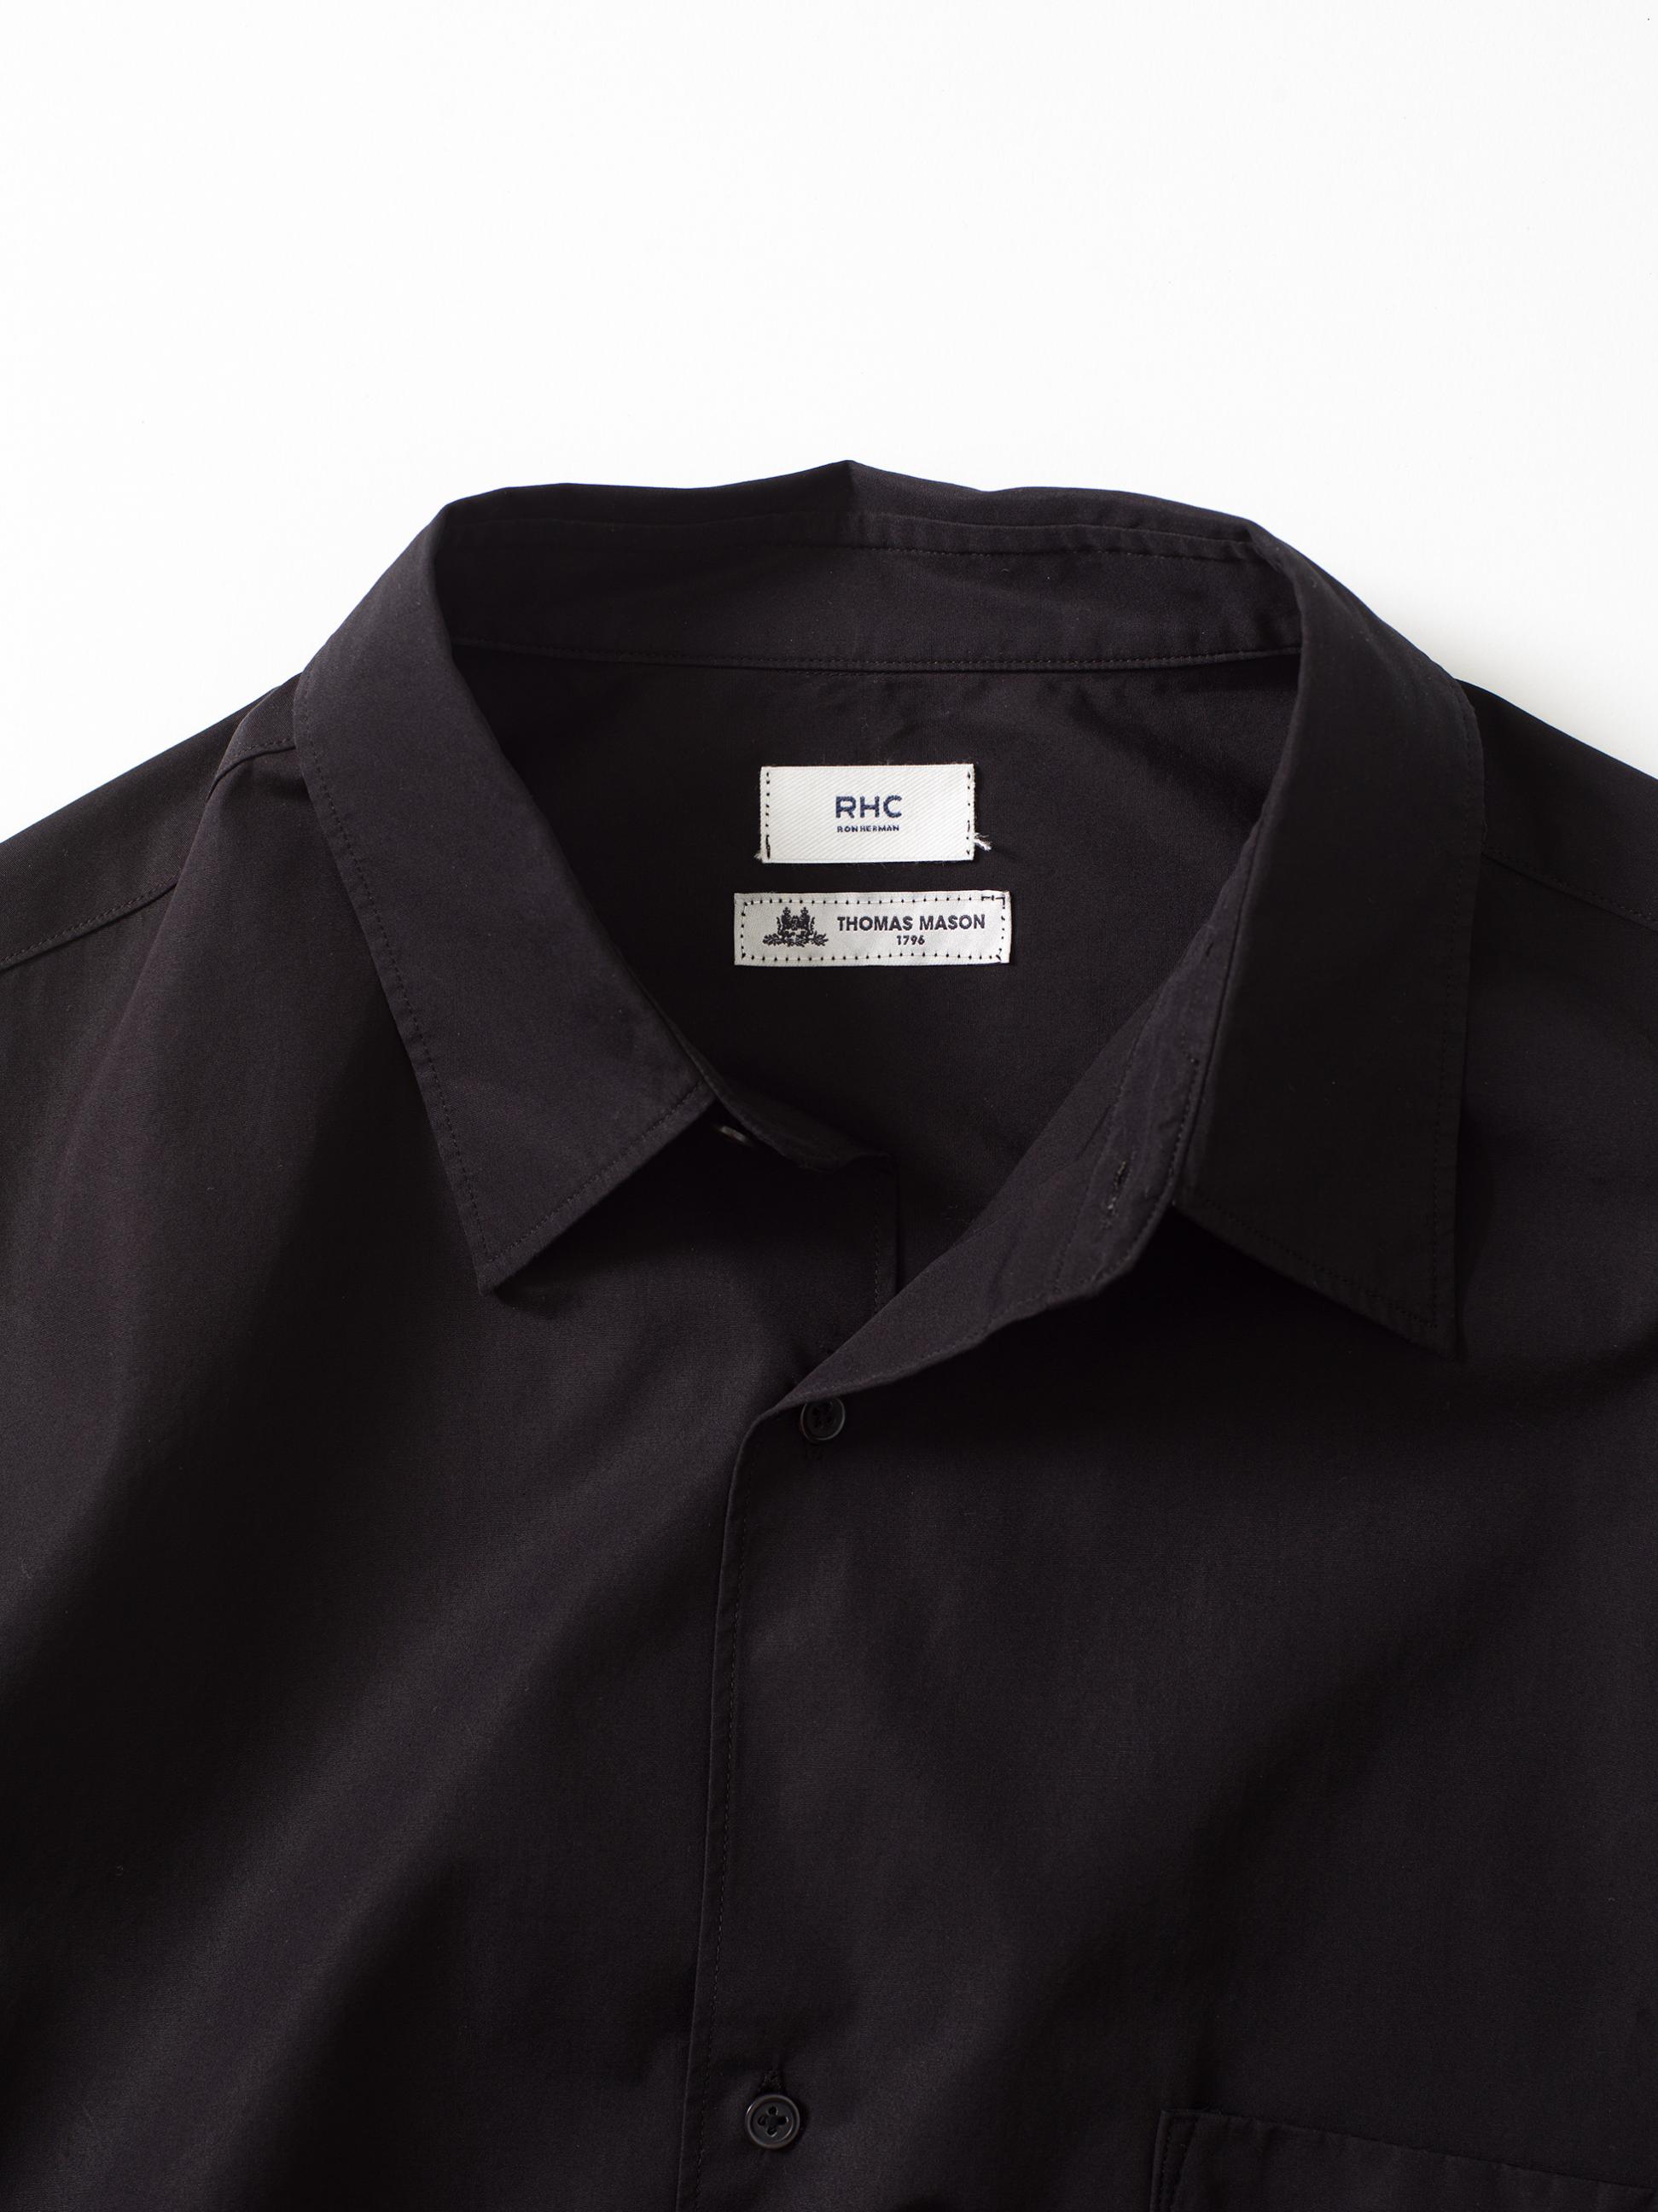 THOMAS MASON Short Sleeve Shirts｜Pick Up Item | RHC ronherman